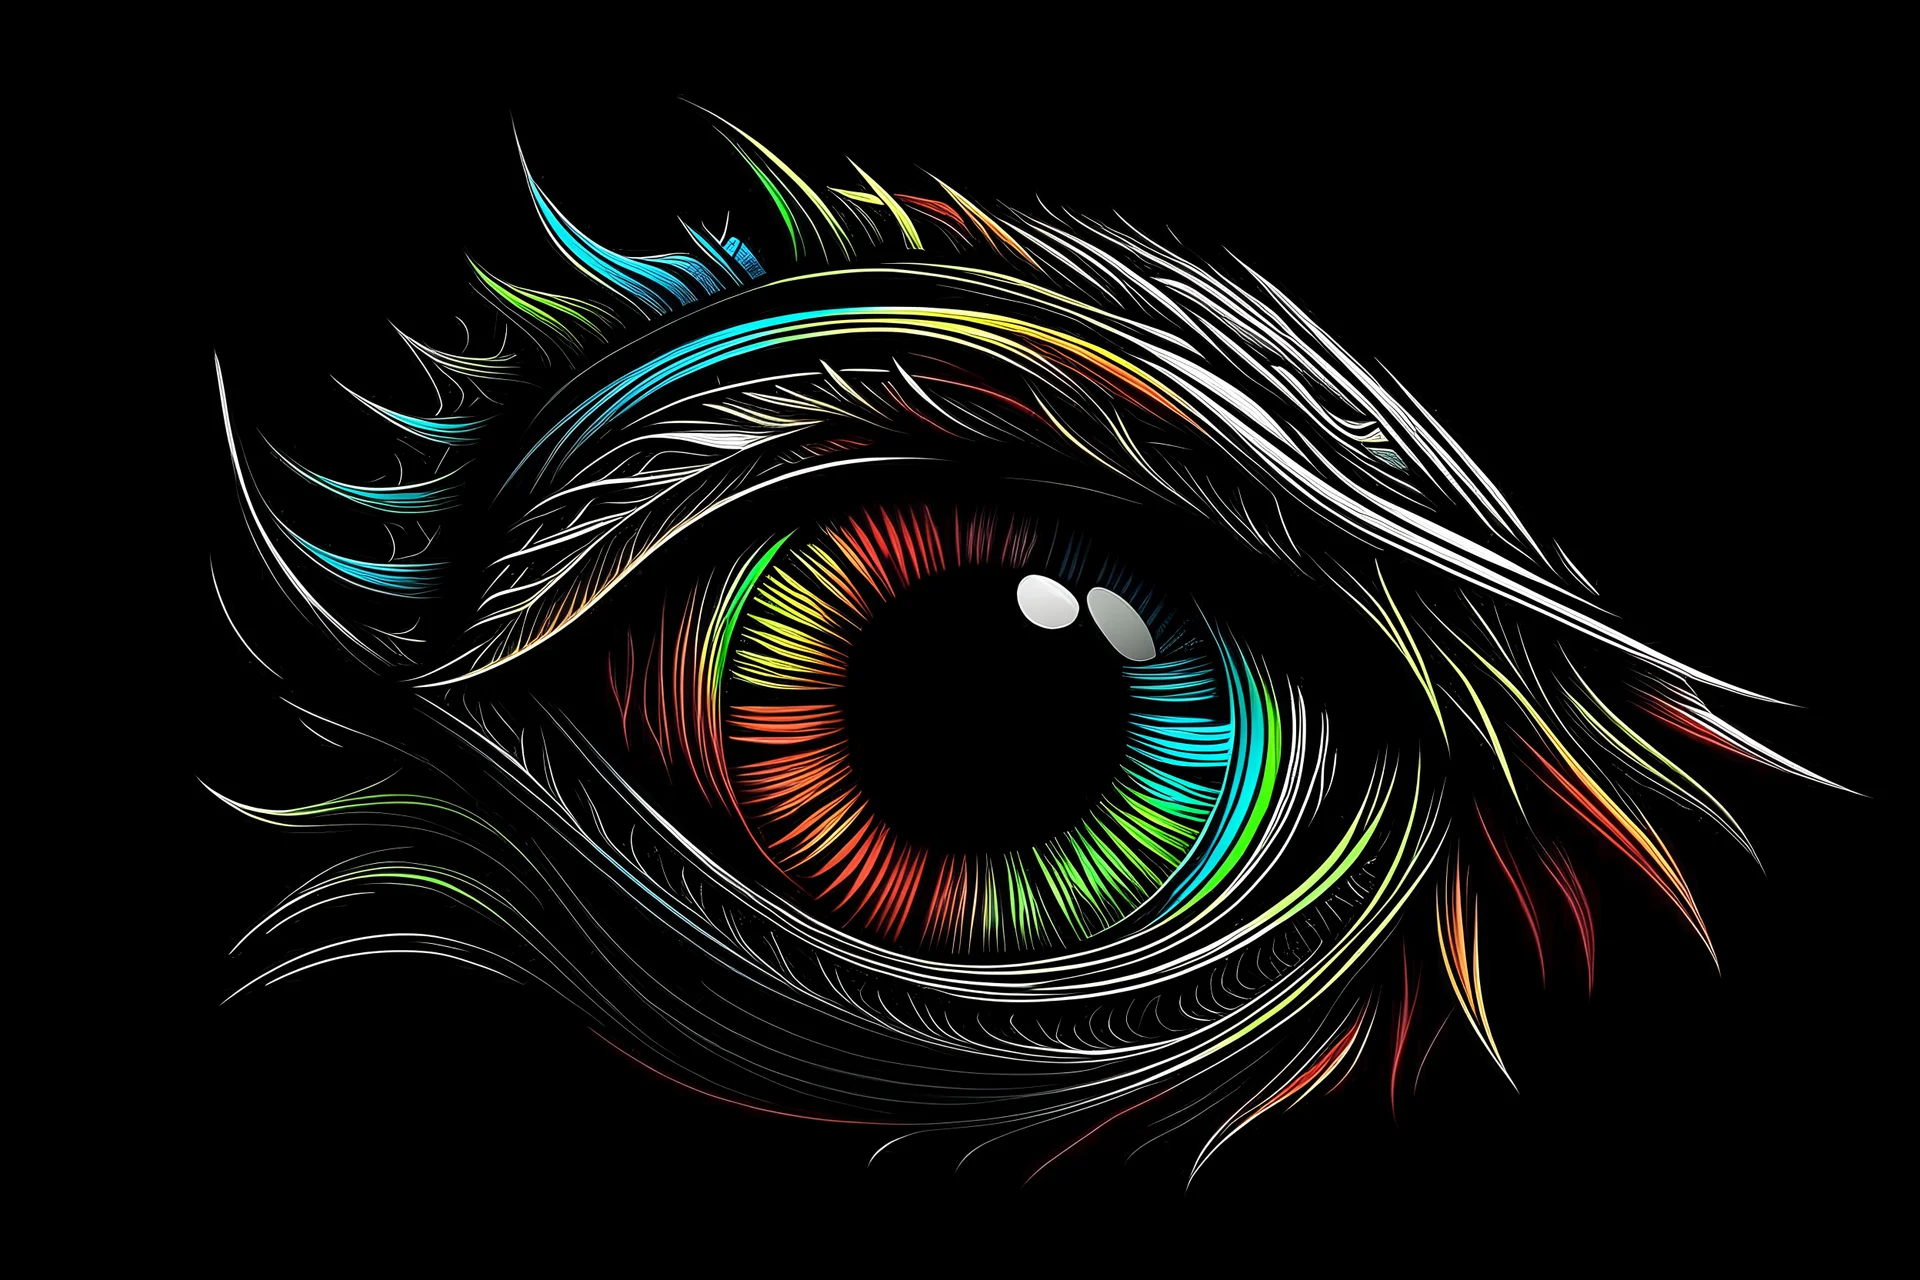 Line art, single drawn dragon eye with multicolor line, black background